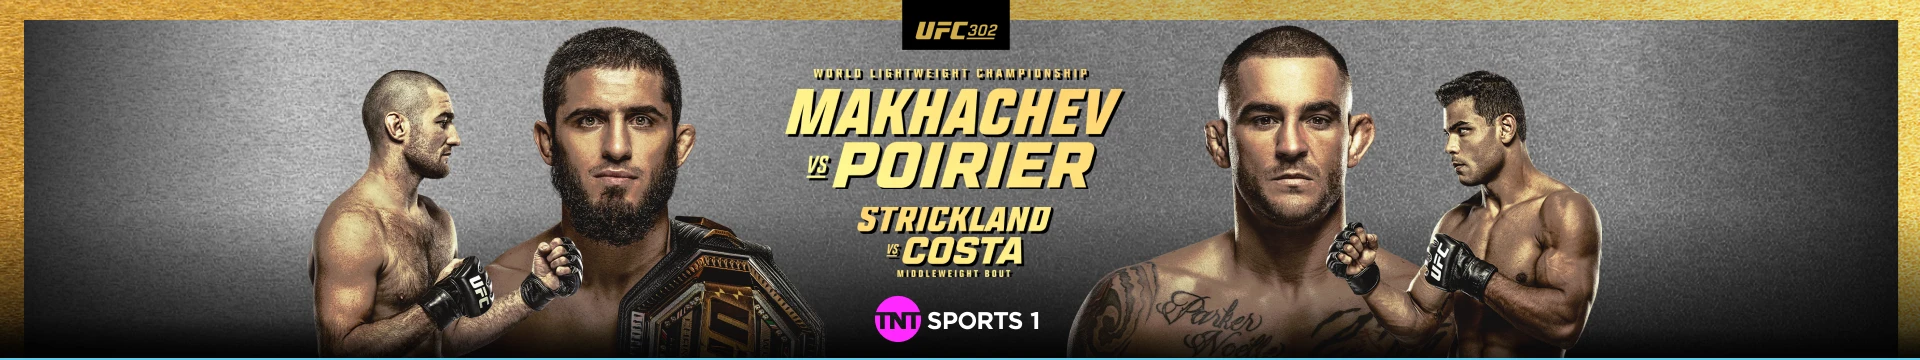 UFC 302: World Lightweight Championship - Makhachev vs Poirier & Strickland vs Costa Middleweight bout - TNT Sports 1